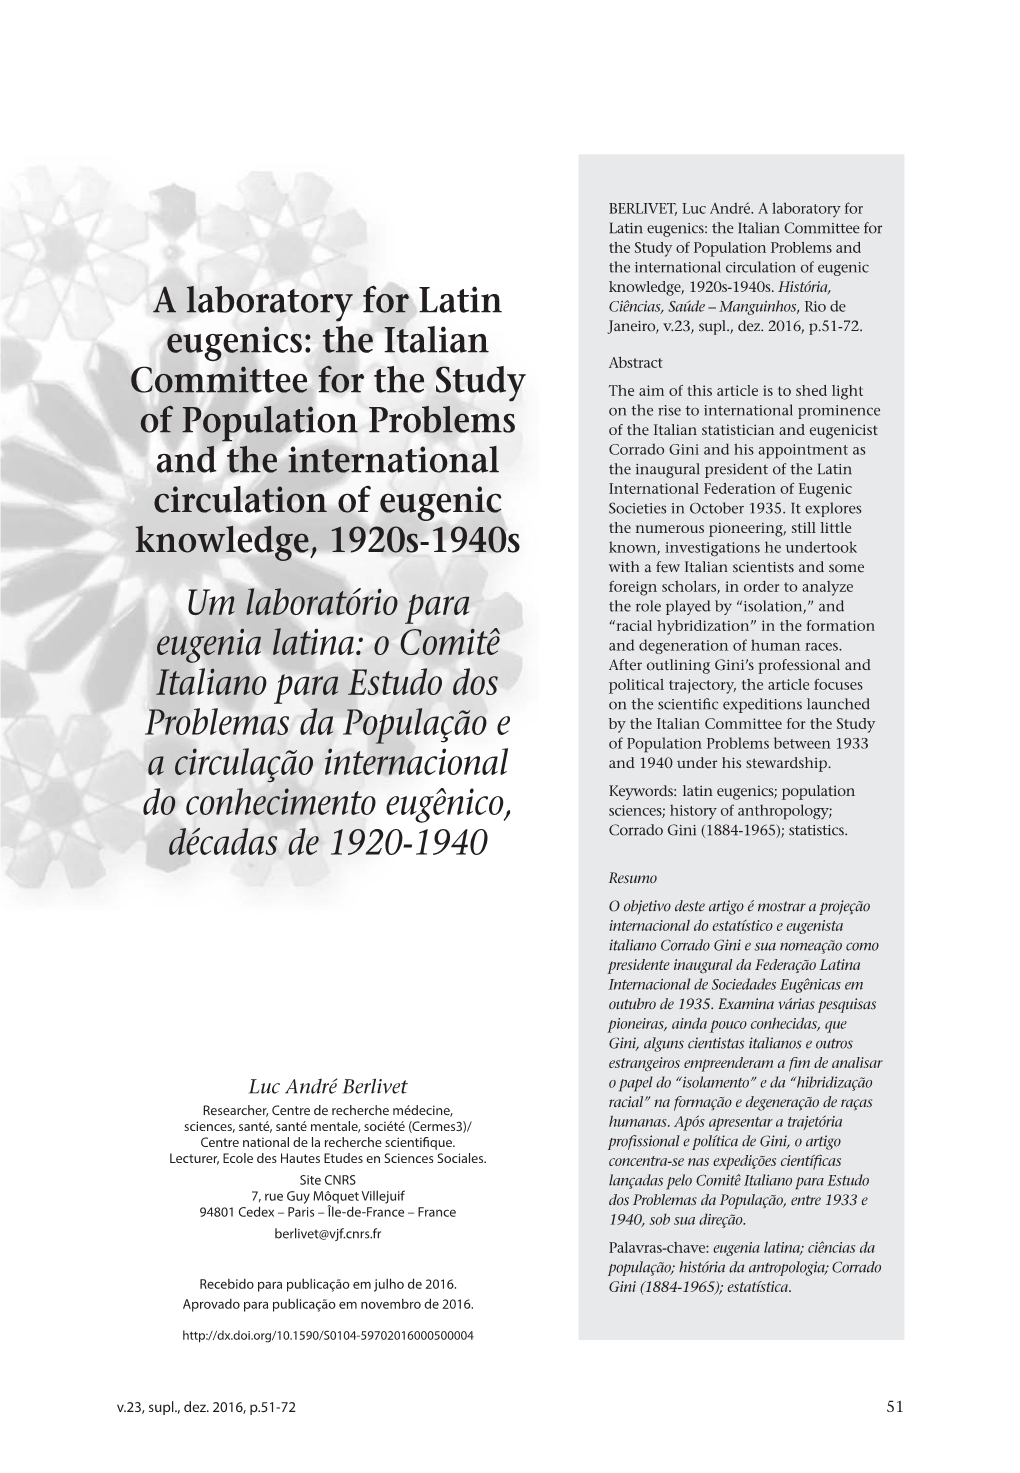 A Laboratory for Latin Eugenics